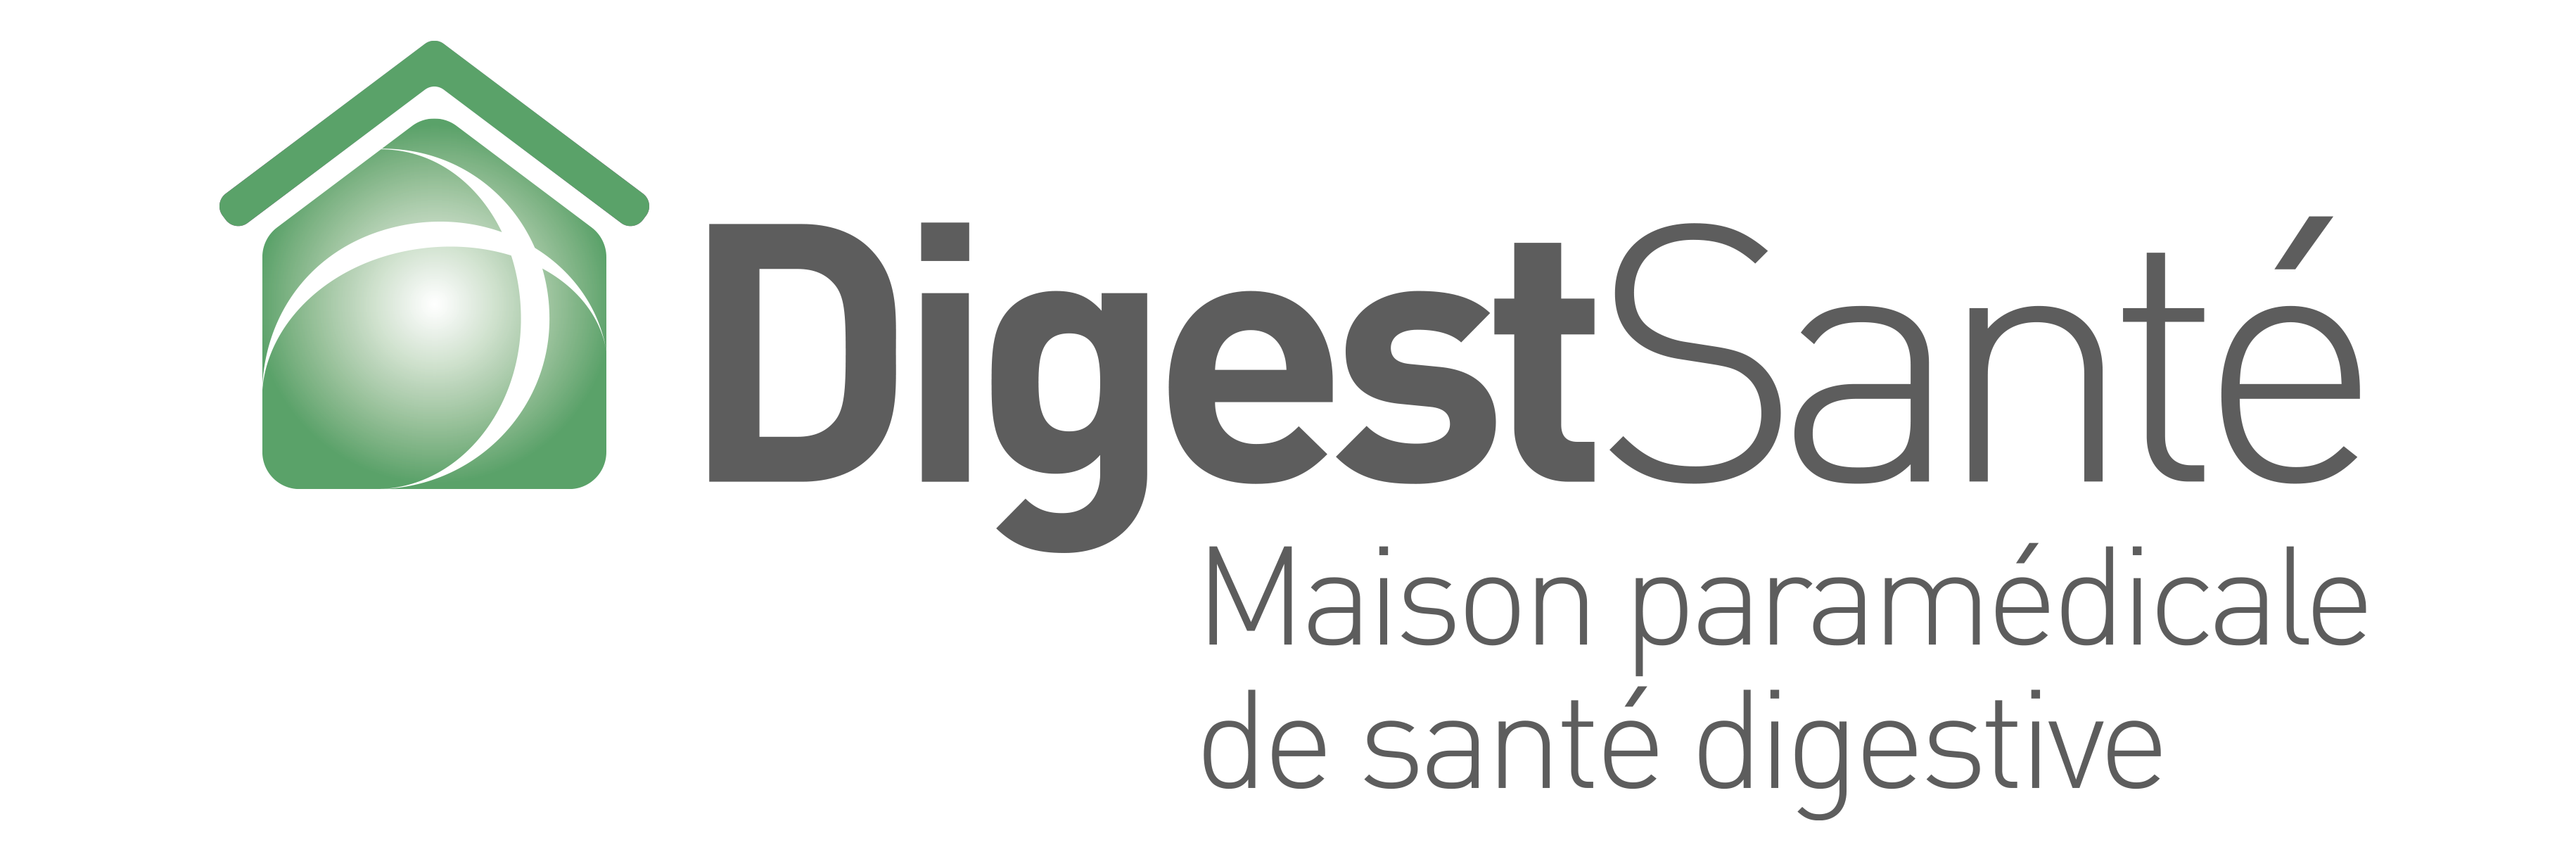 Logo DigestSanté